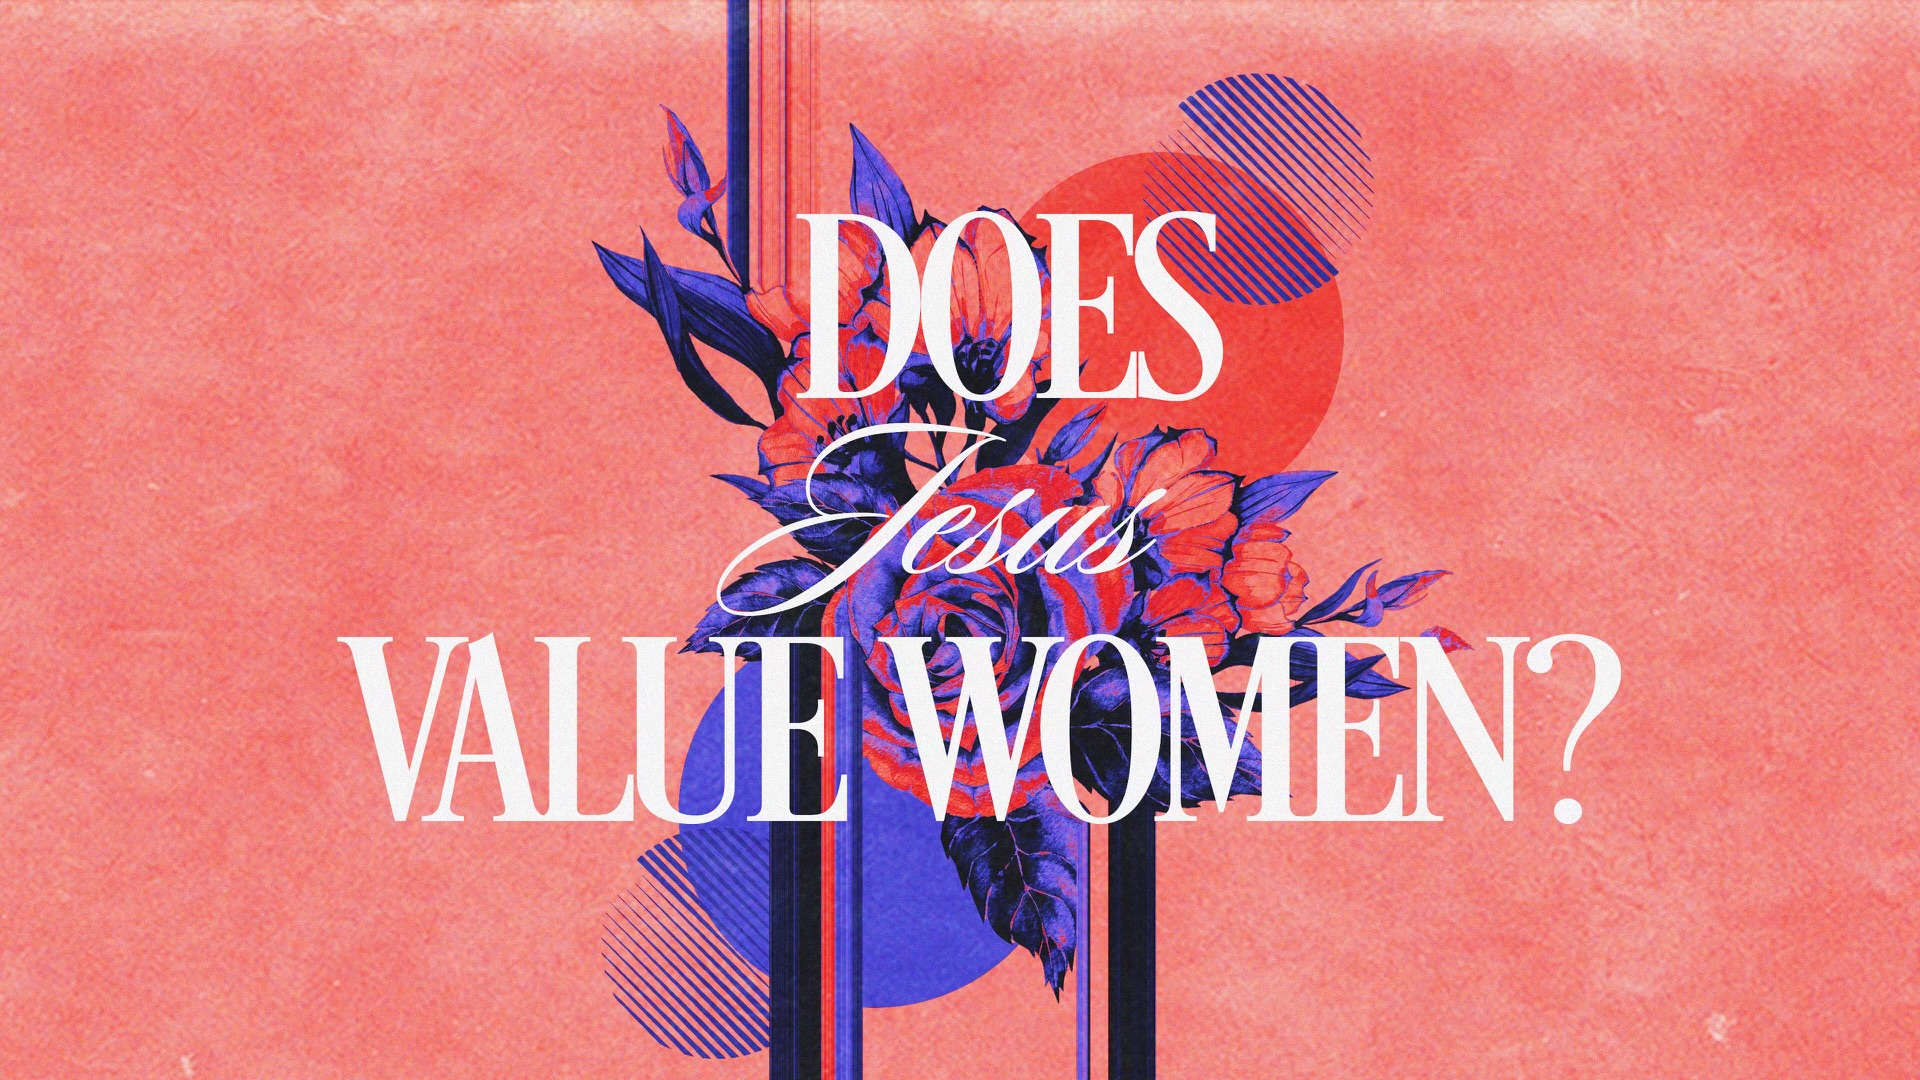 Does Jesus Value Women?